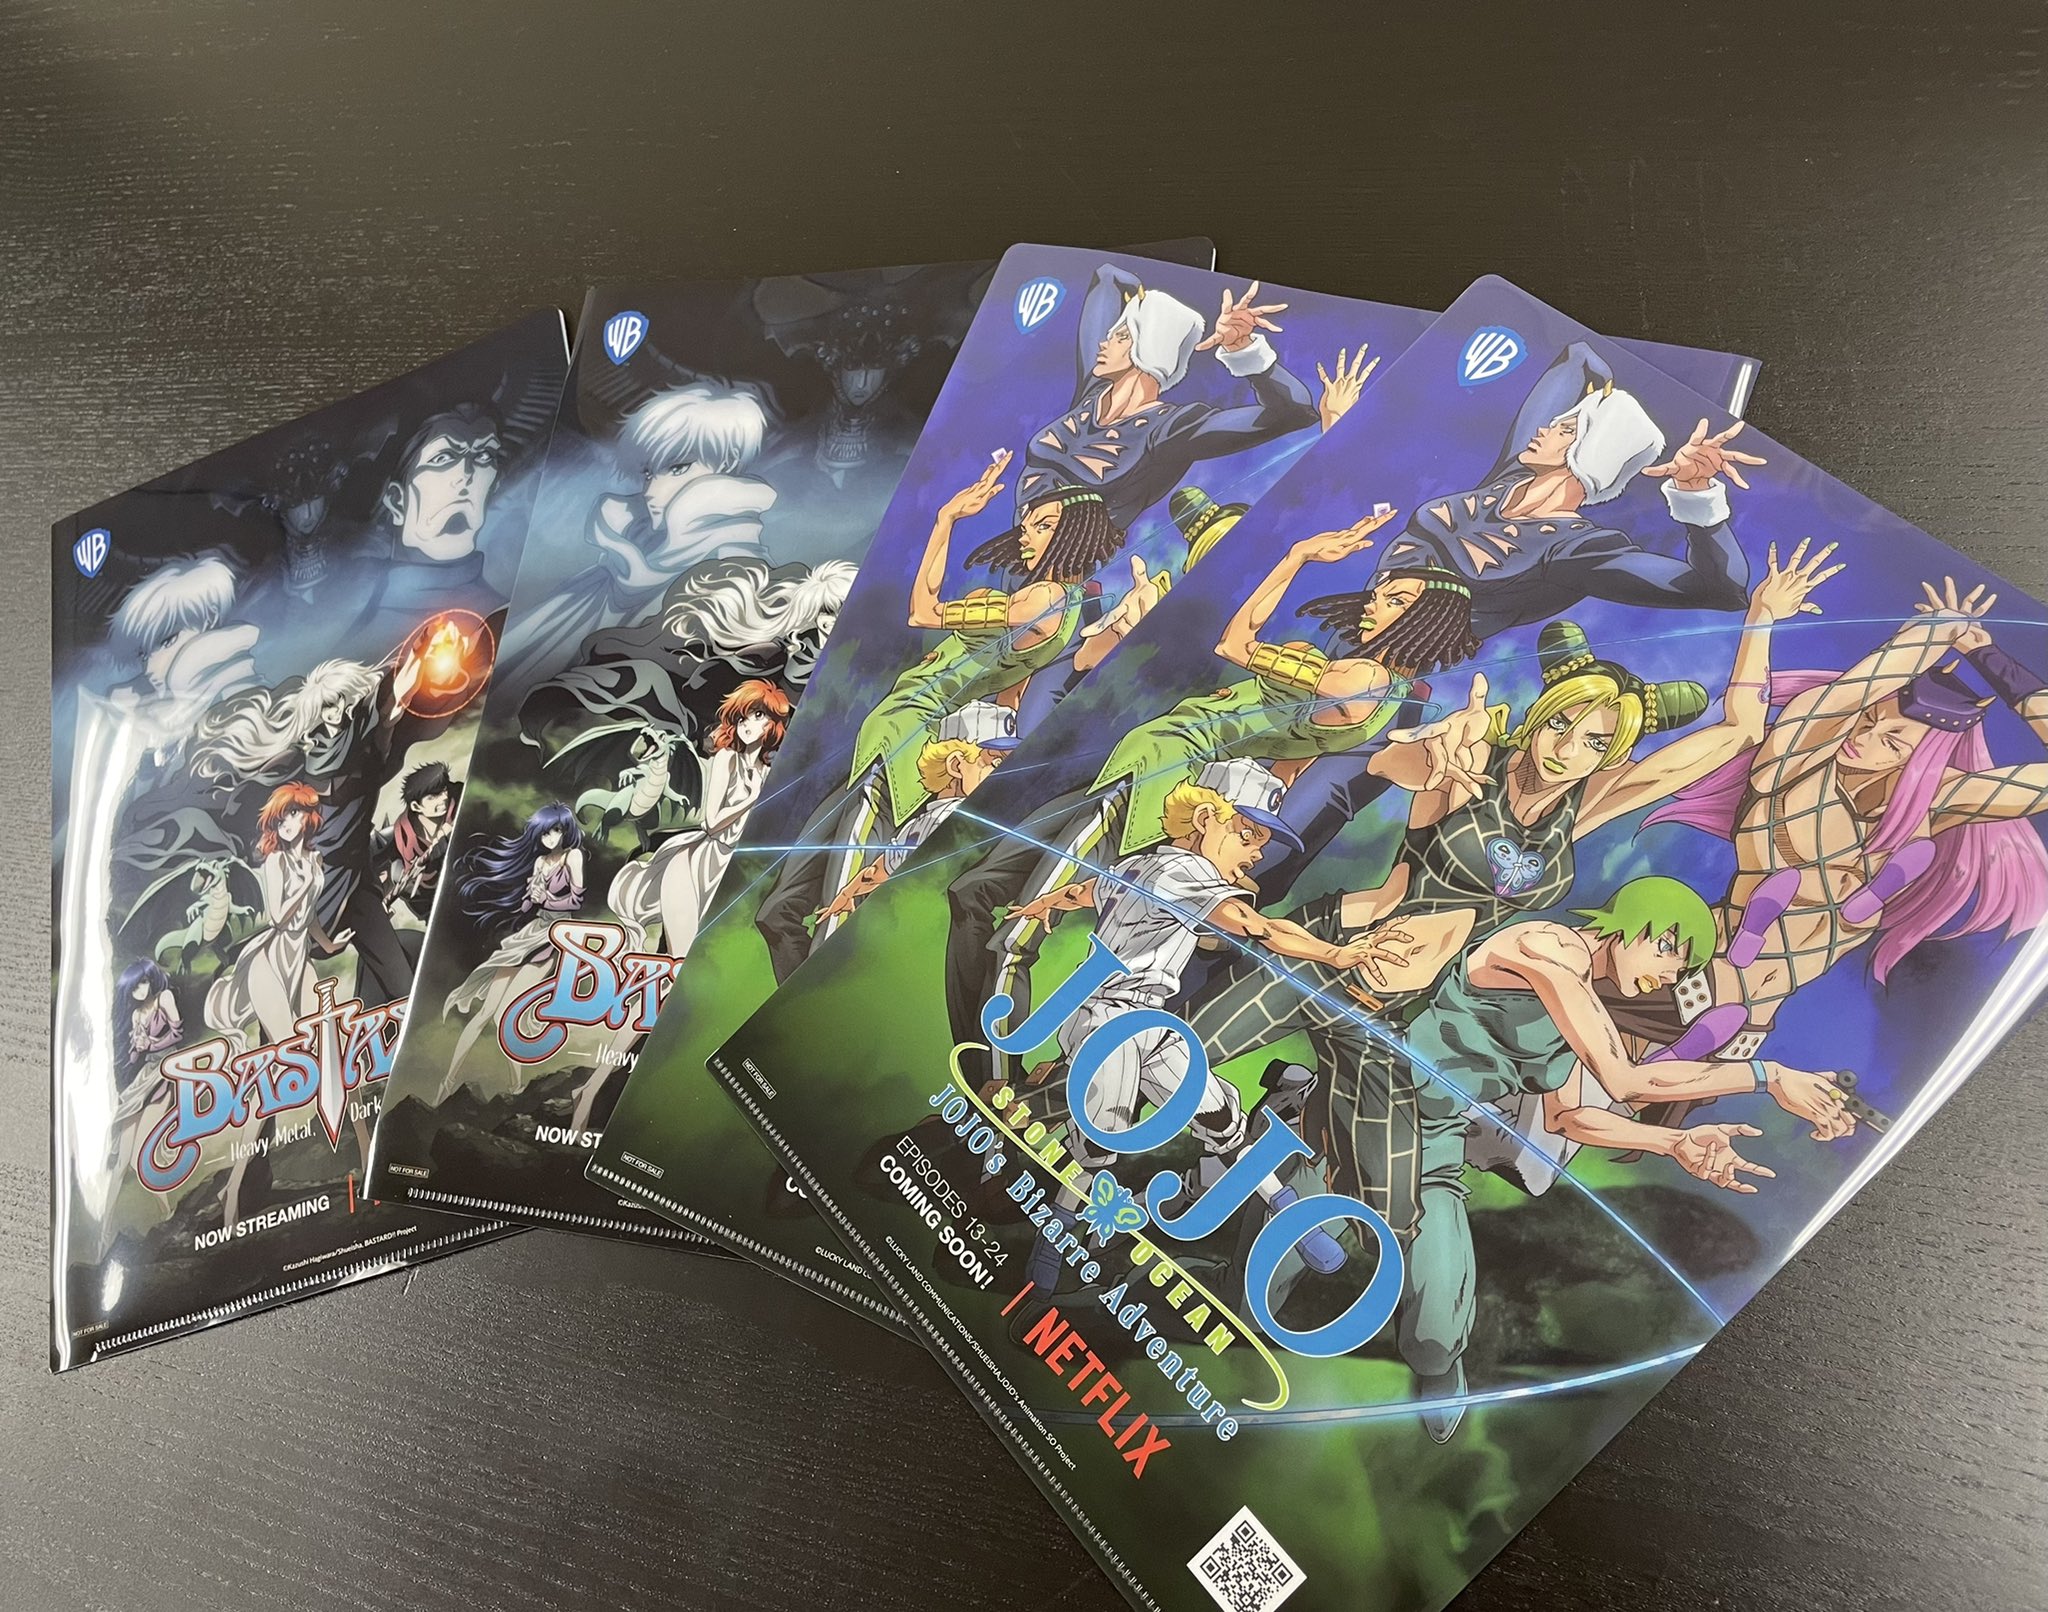 Warner Bros. Japan Anime Panel feat. Record of Ragnarok Ⅱ - Anime Expo